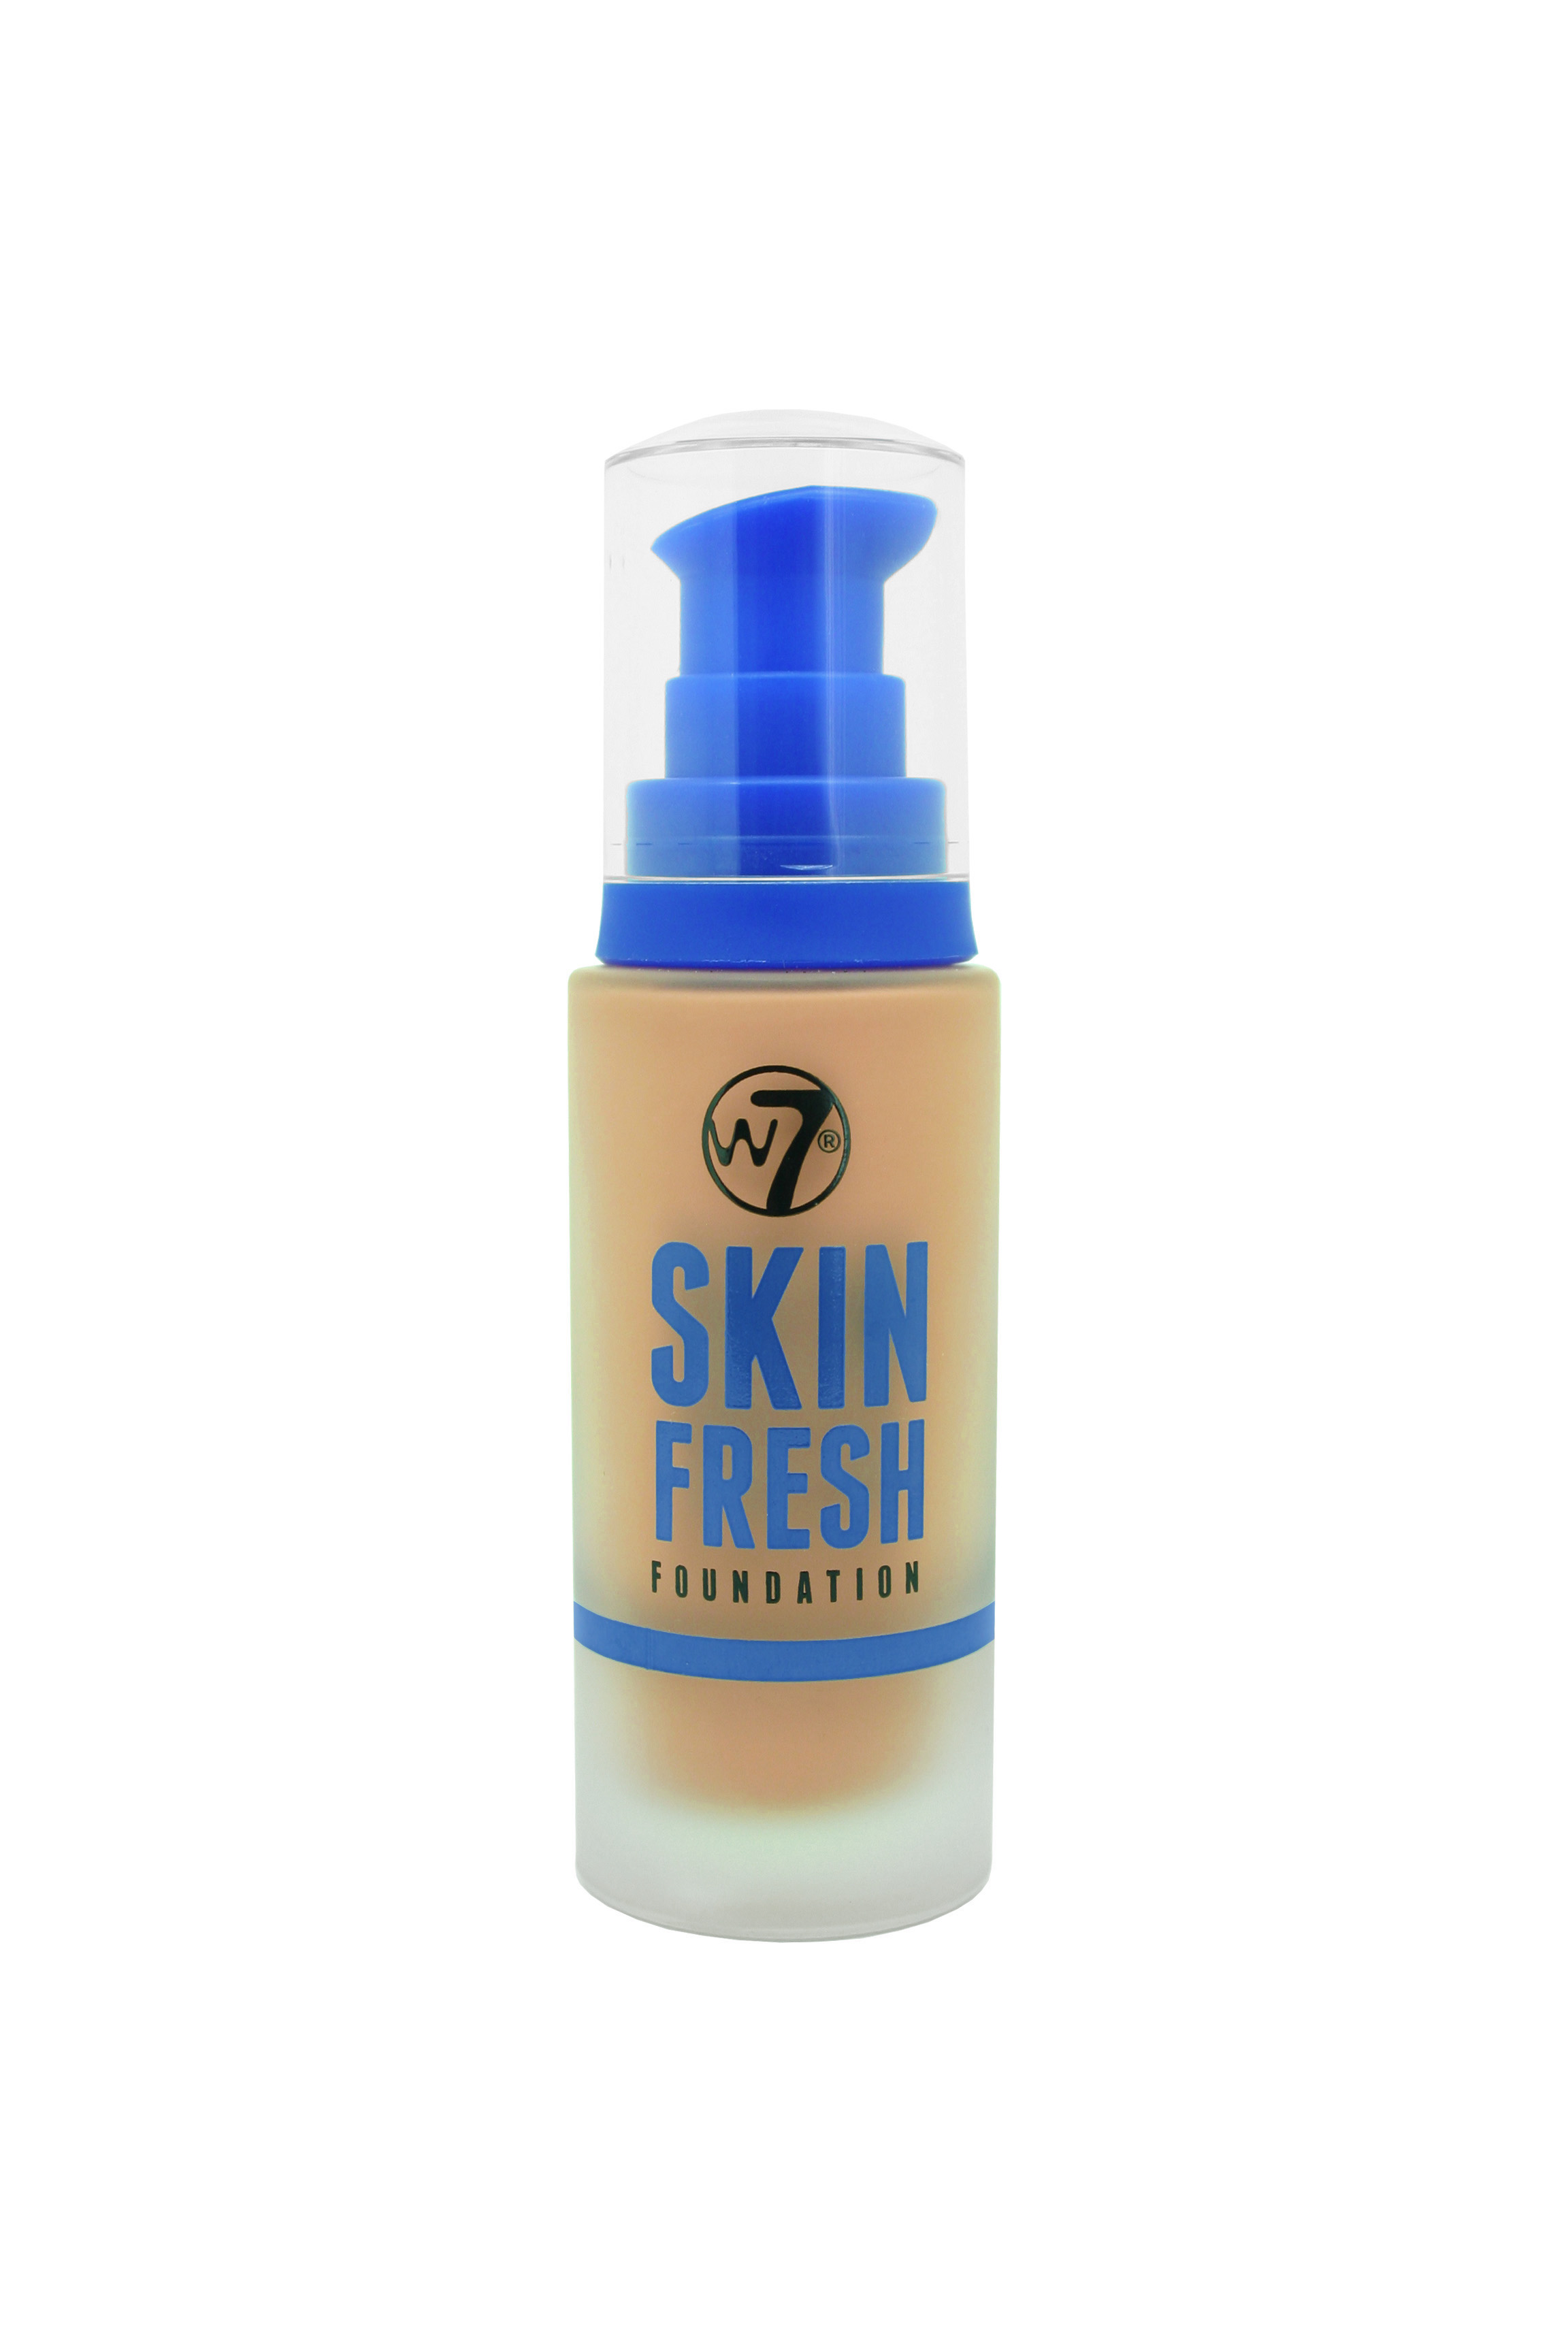 W7 Skin Fresh Foundation - Cameo Beige [CLONE]